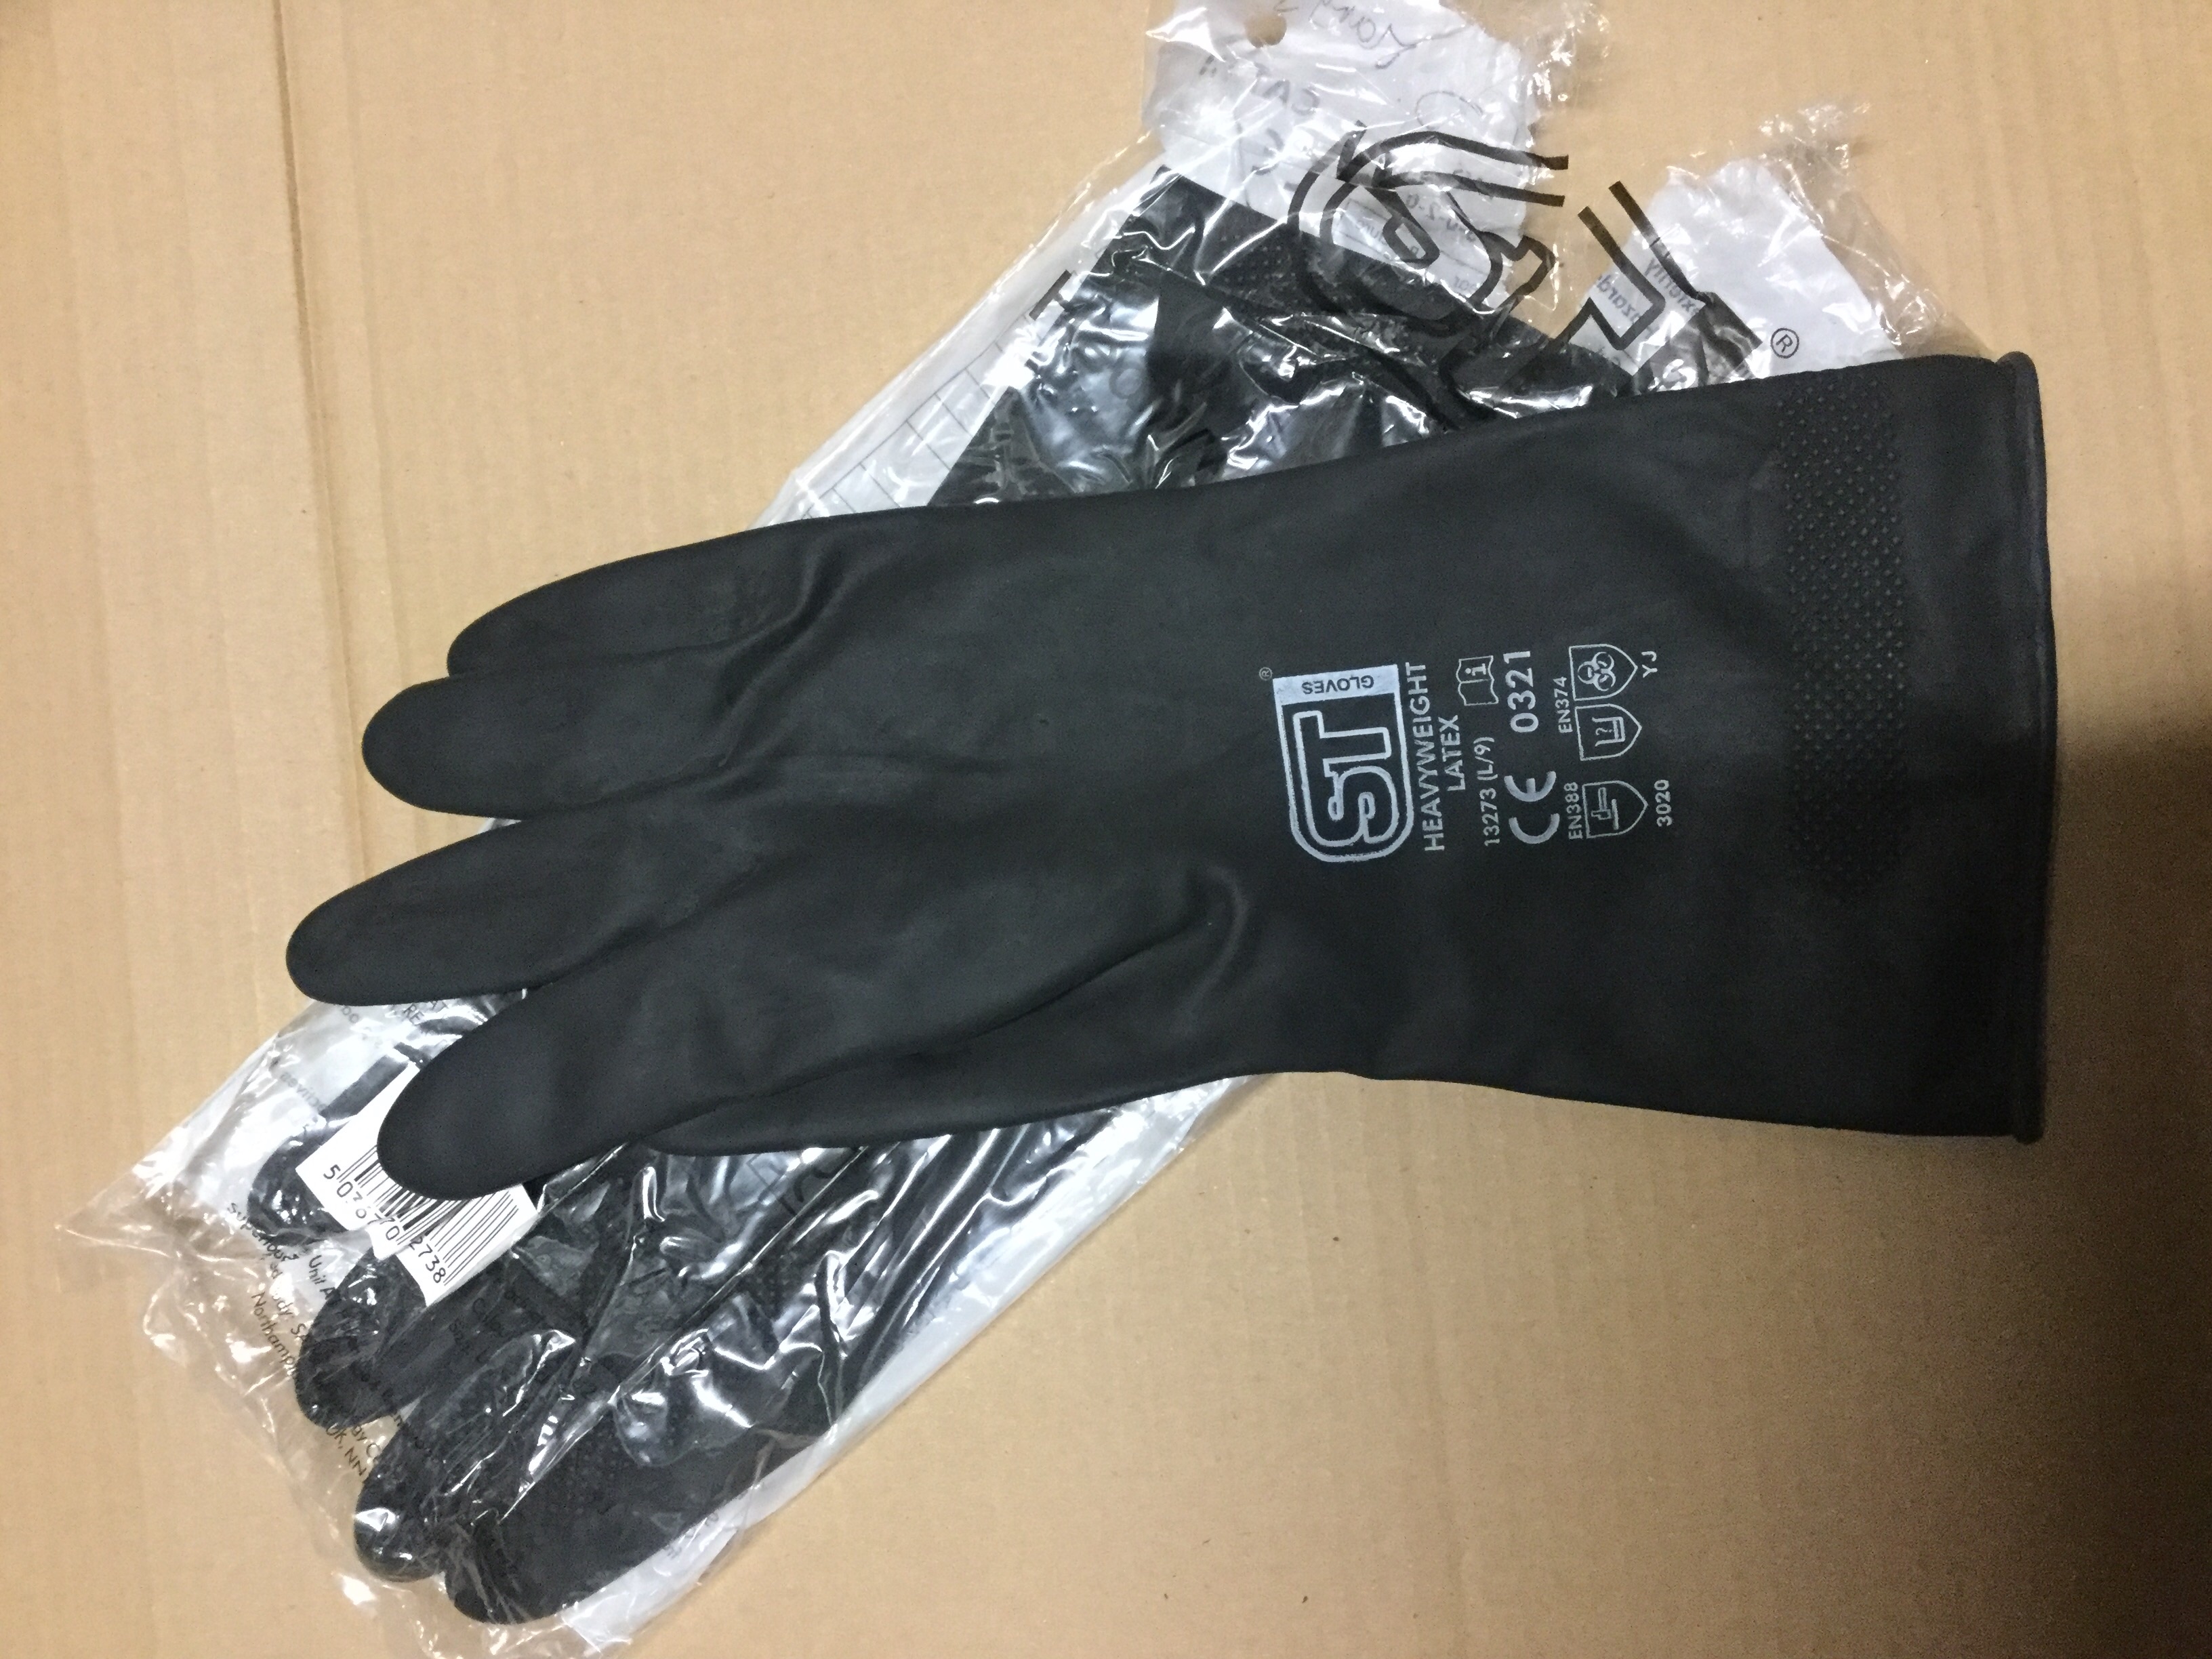 Heavy duty household rubber gloves 